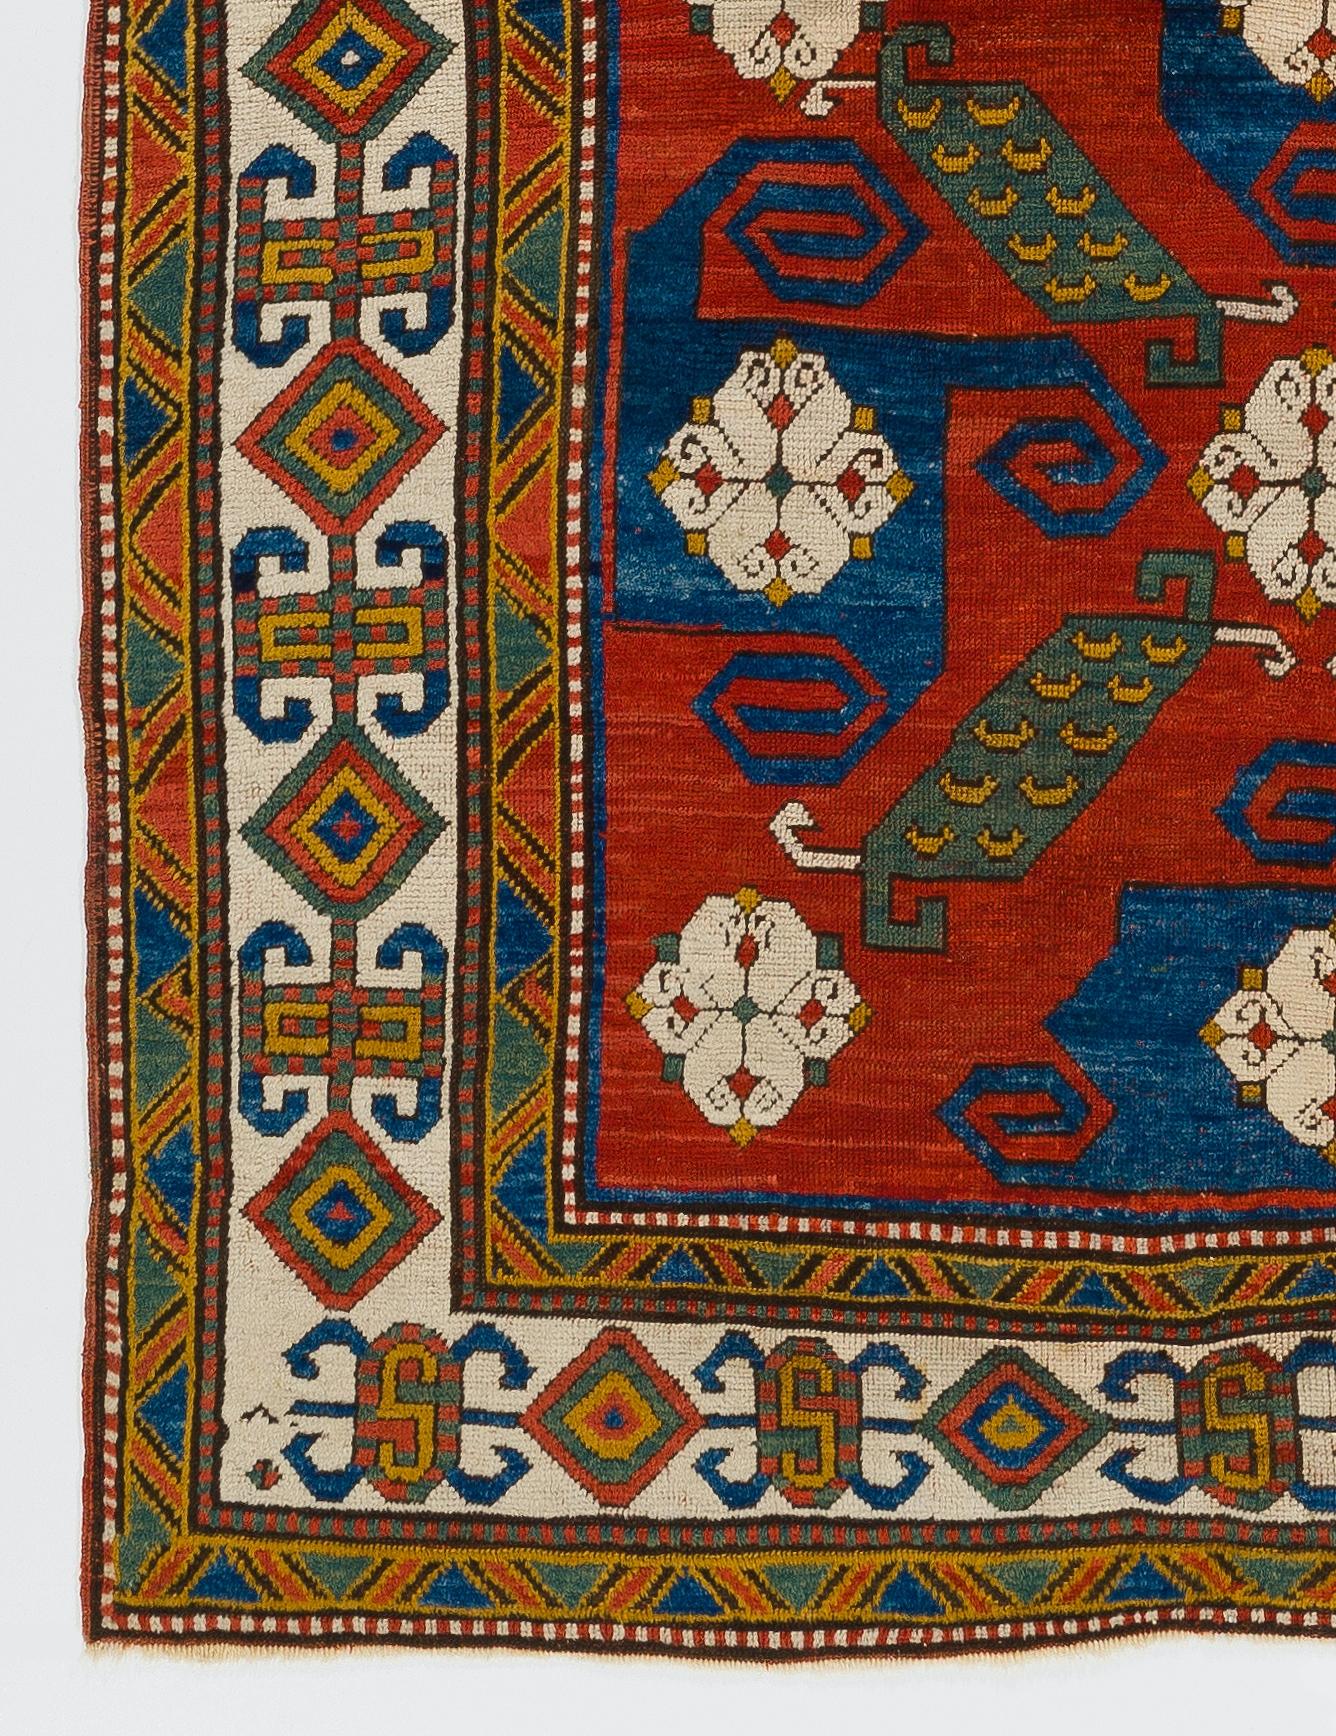 19th Century Antique Caucasian Pinwheel Kazak Rug. Top Shelf Collectors Carpet. 5'6